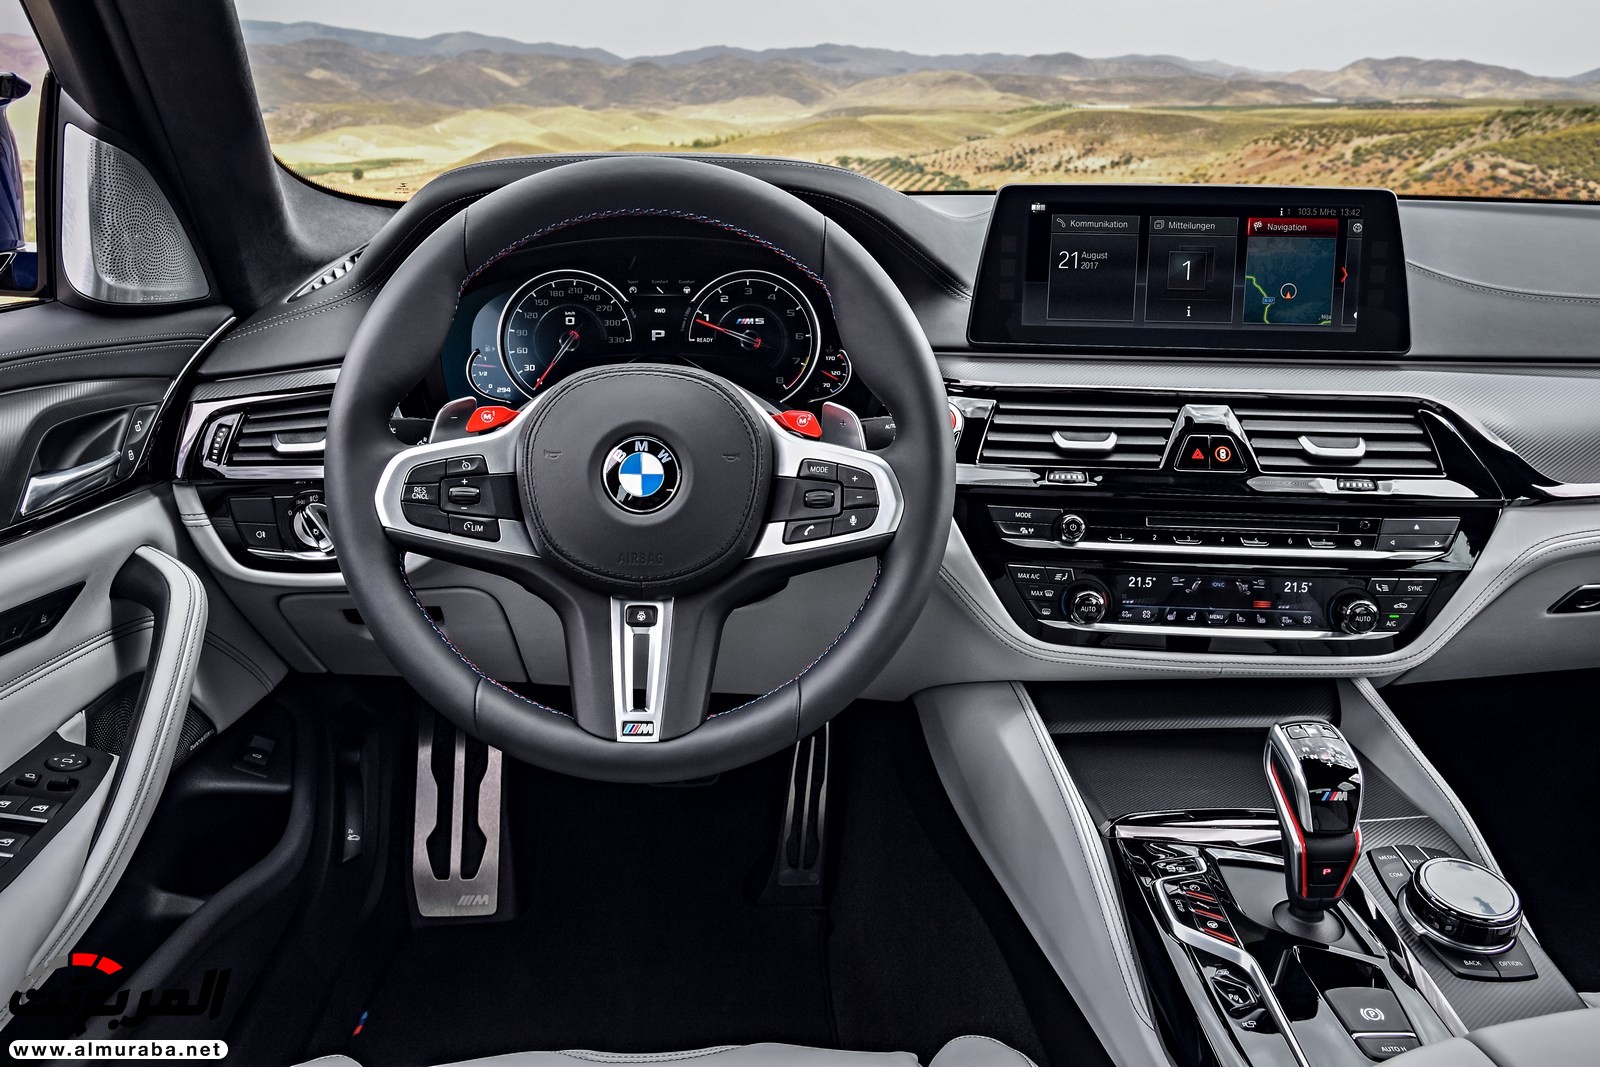 بي ام دبليو M5 2018 تكشف نفسها رسمياً بقوة ٦٠٠ حصان "صور ومواصفات" BMW 189